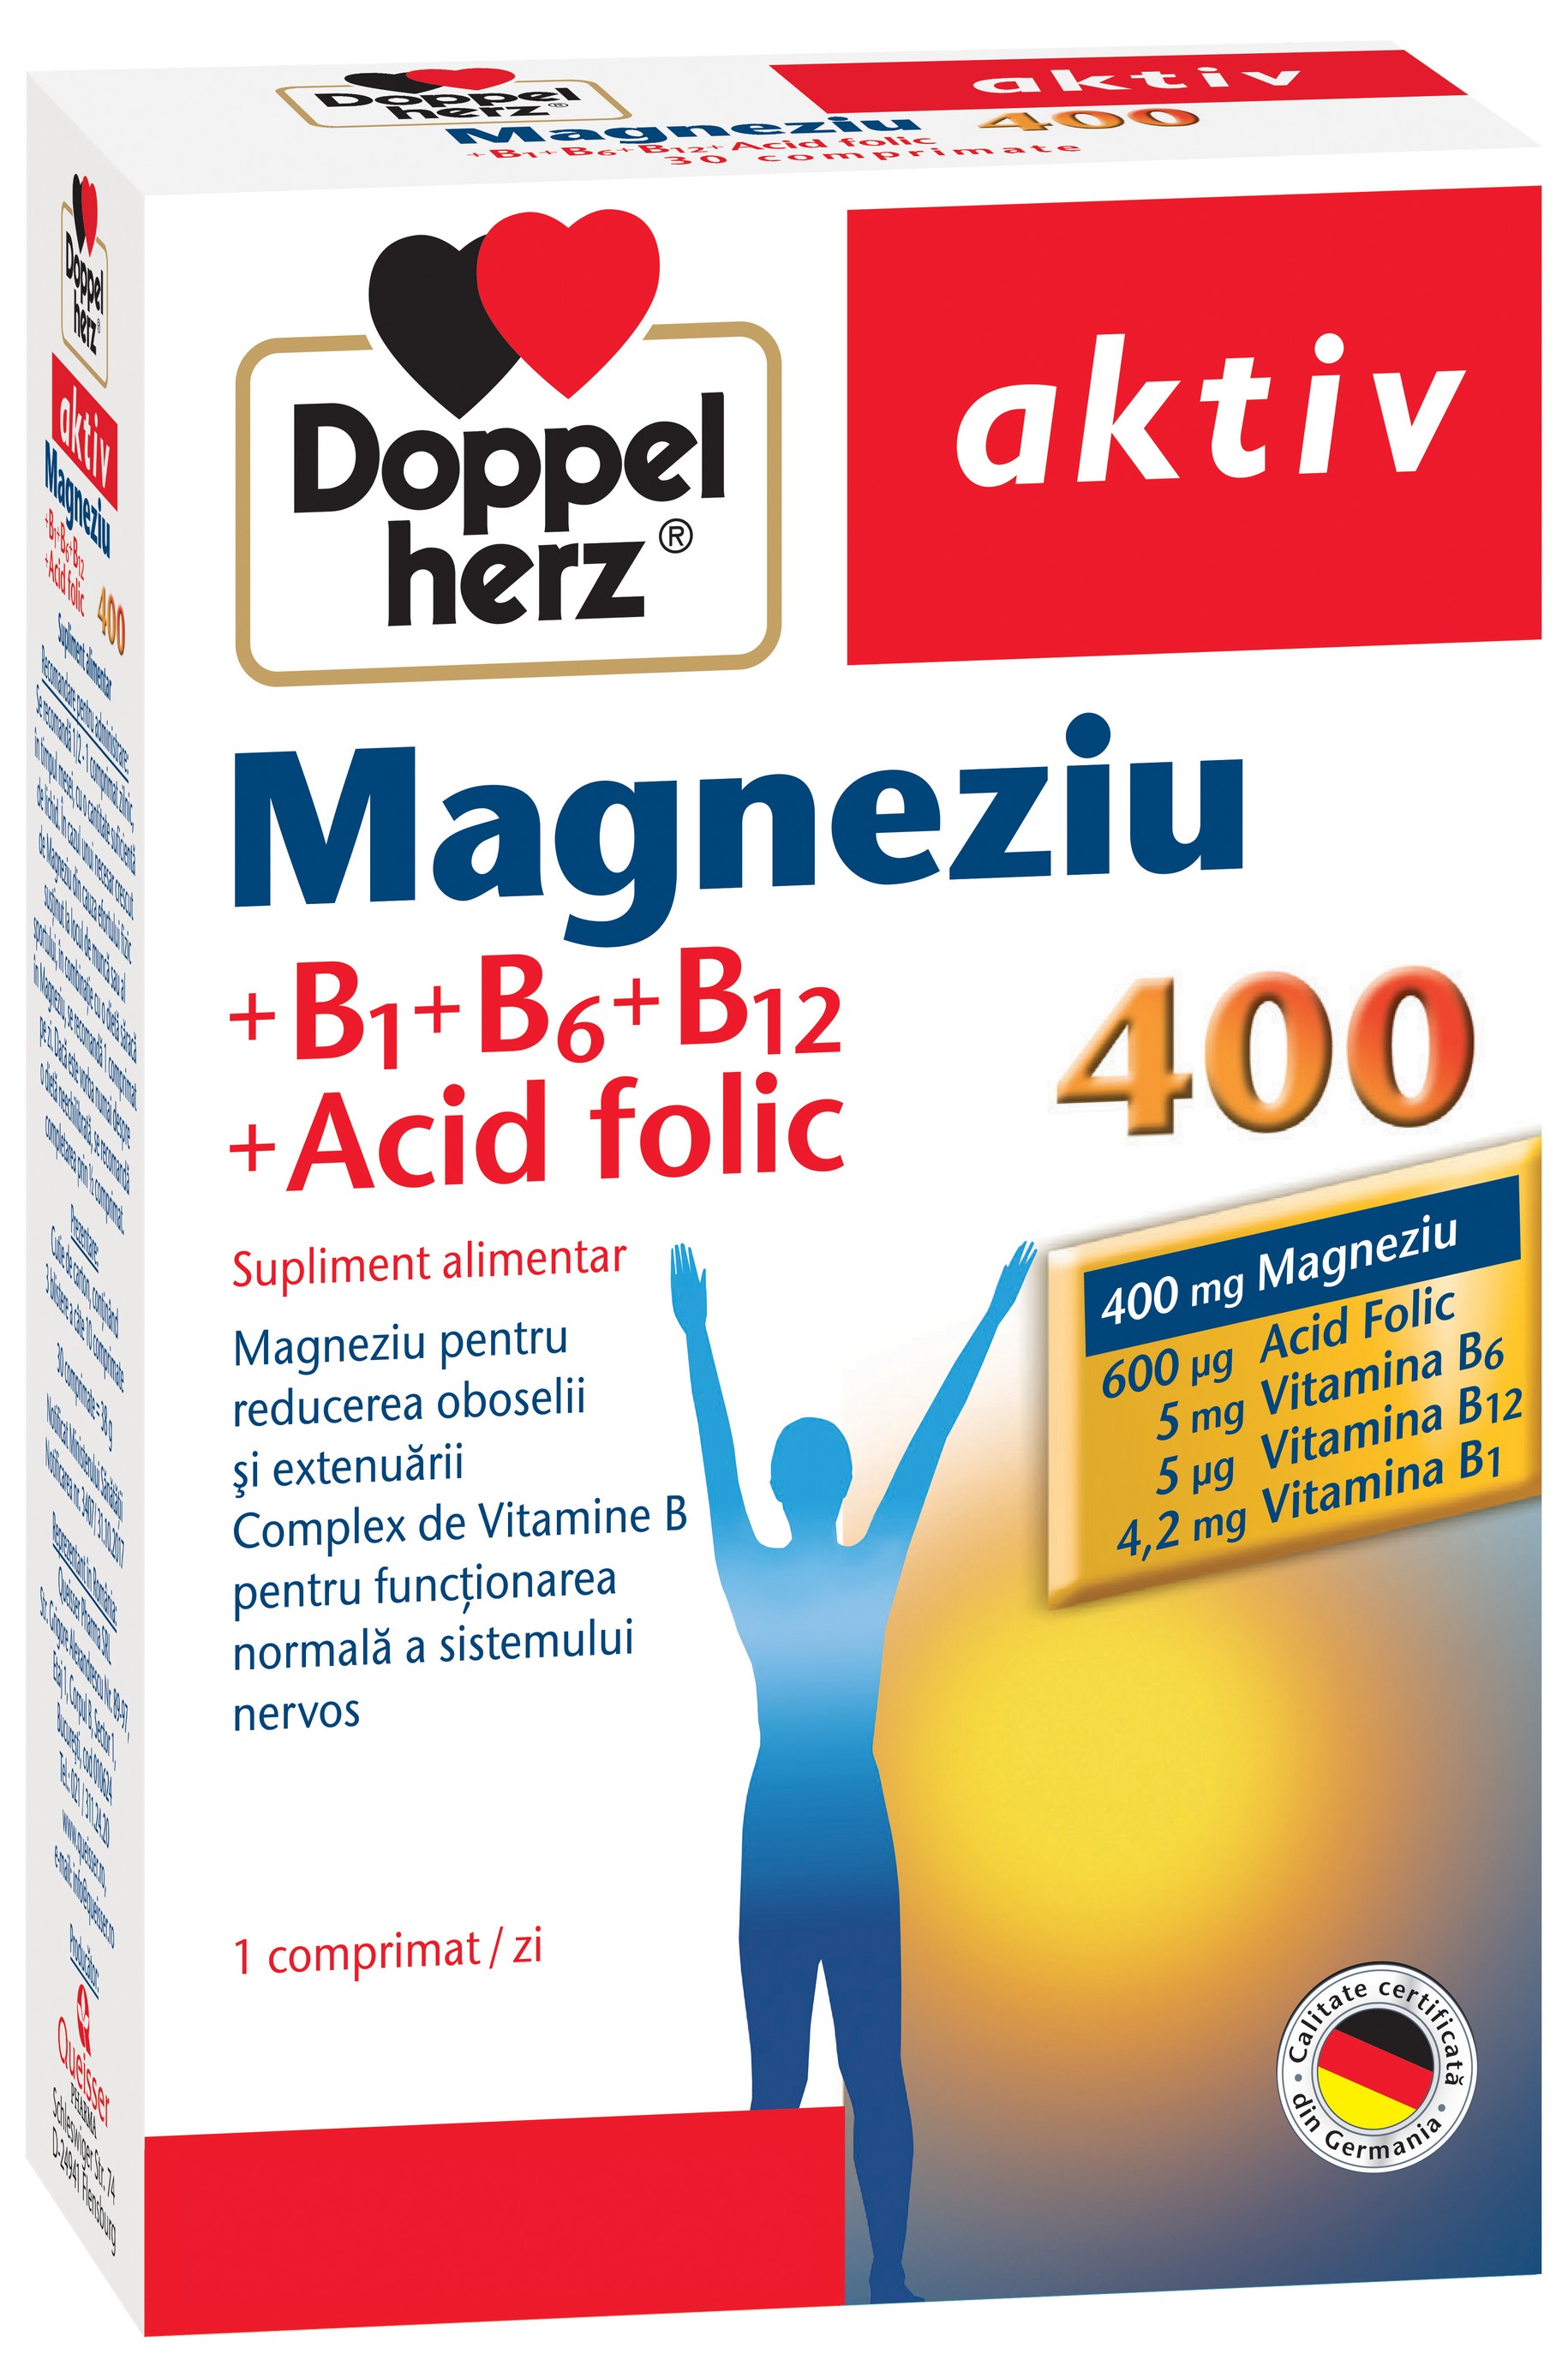 Doppelherz Aktiv Magneziu + B1 + B6 + B12 + Acid folic 30cpr